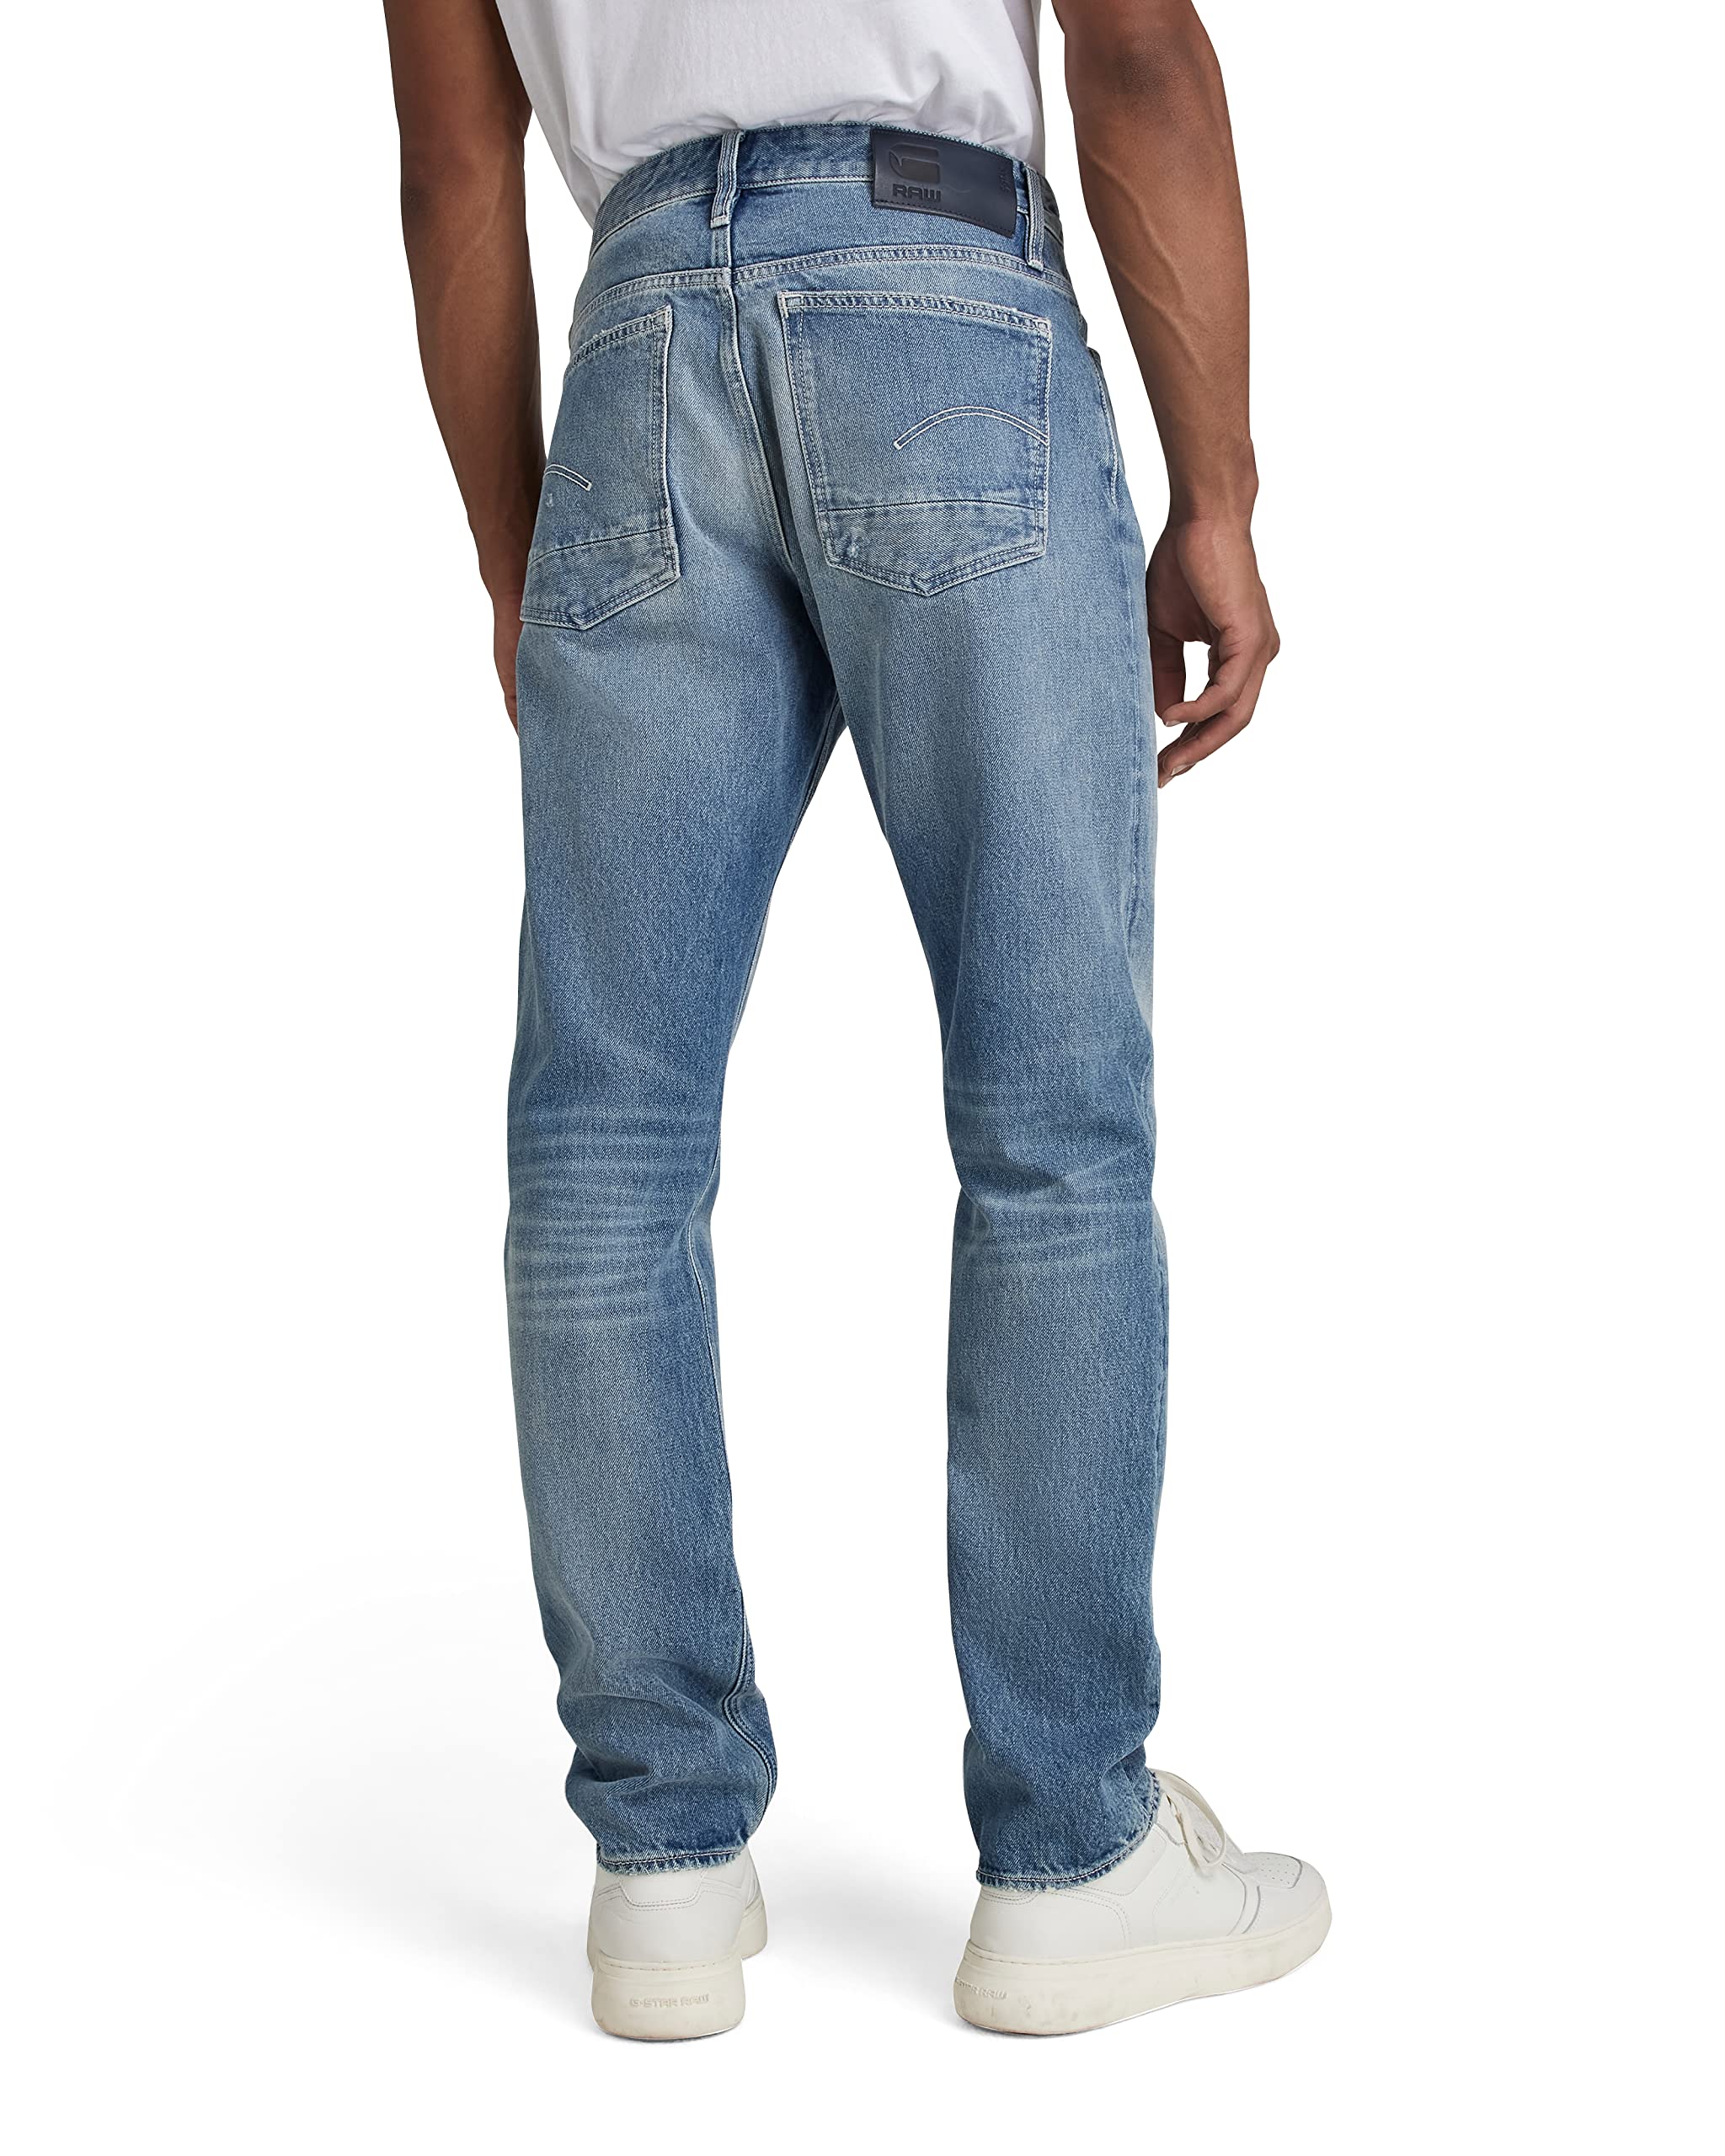 Pants with side pocket raw hem pants - Sula Clothing